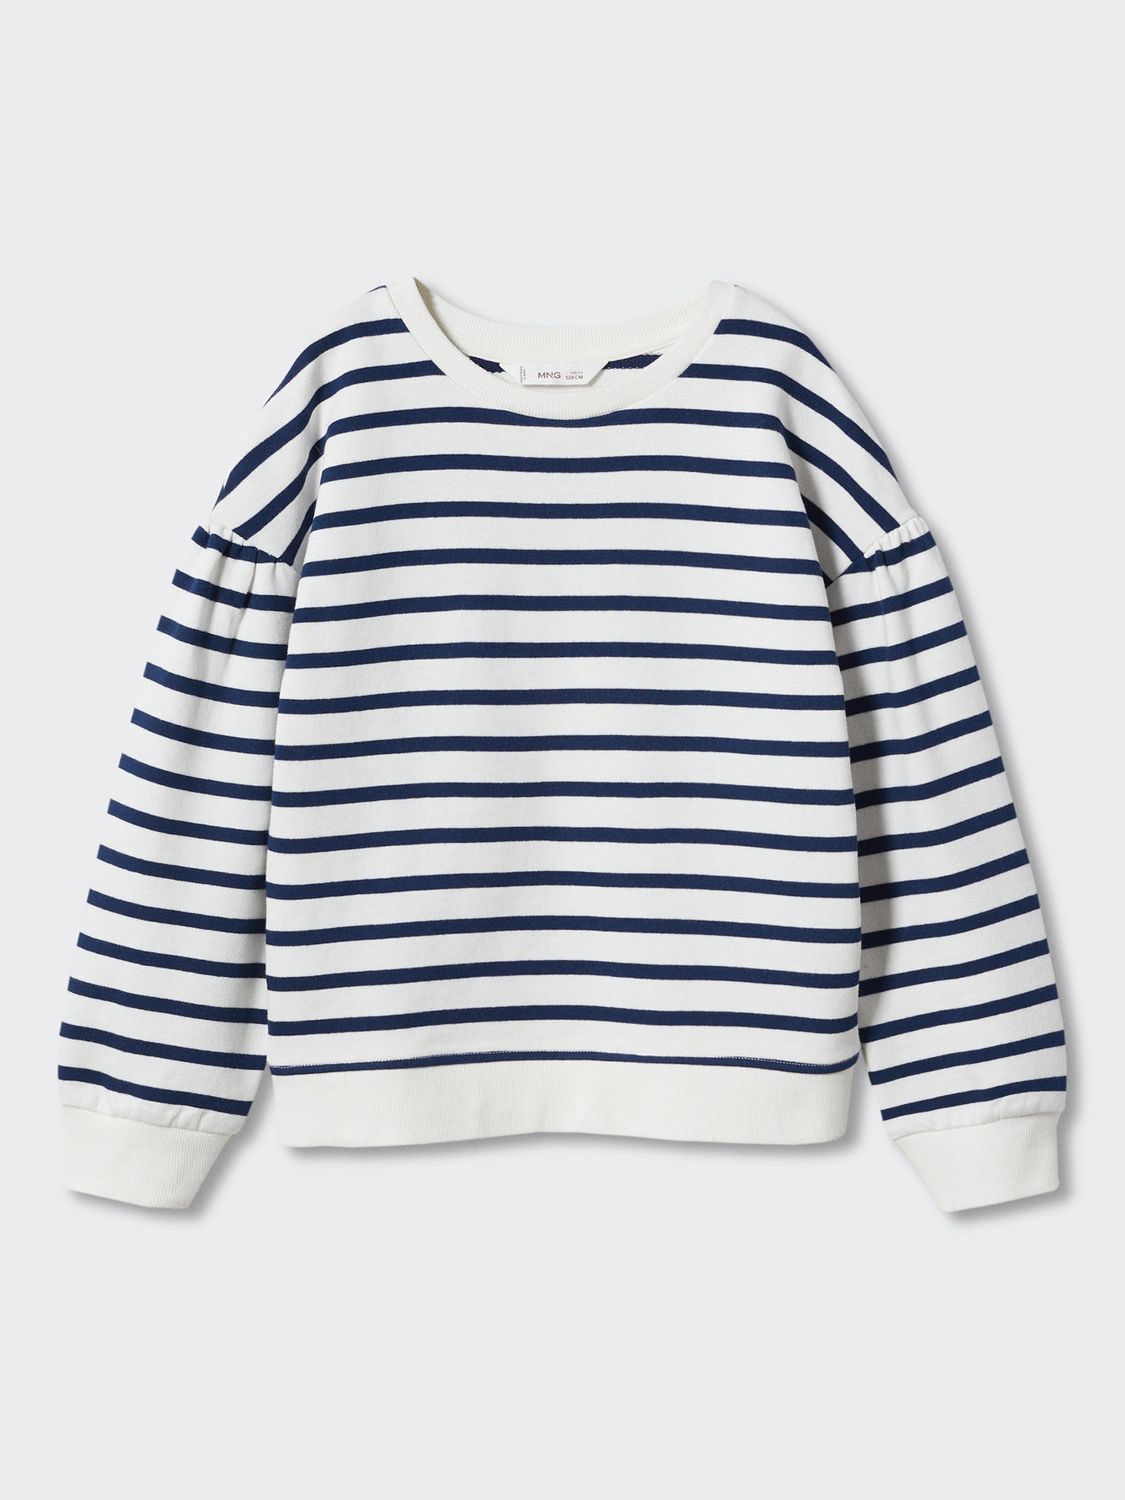 Mango Kids' Sea Cotton Striped Sweatshirt, Navy/White